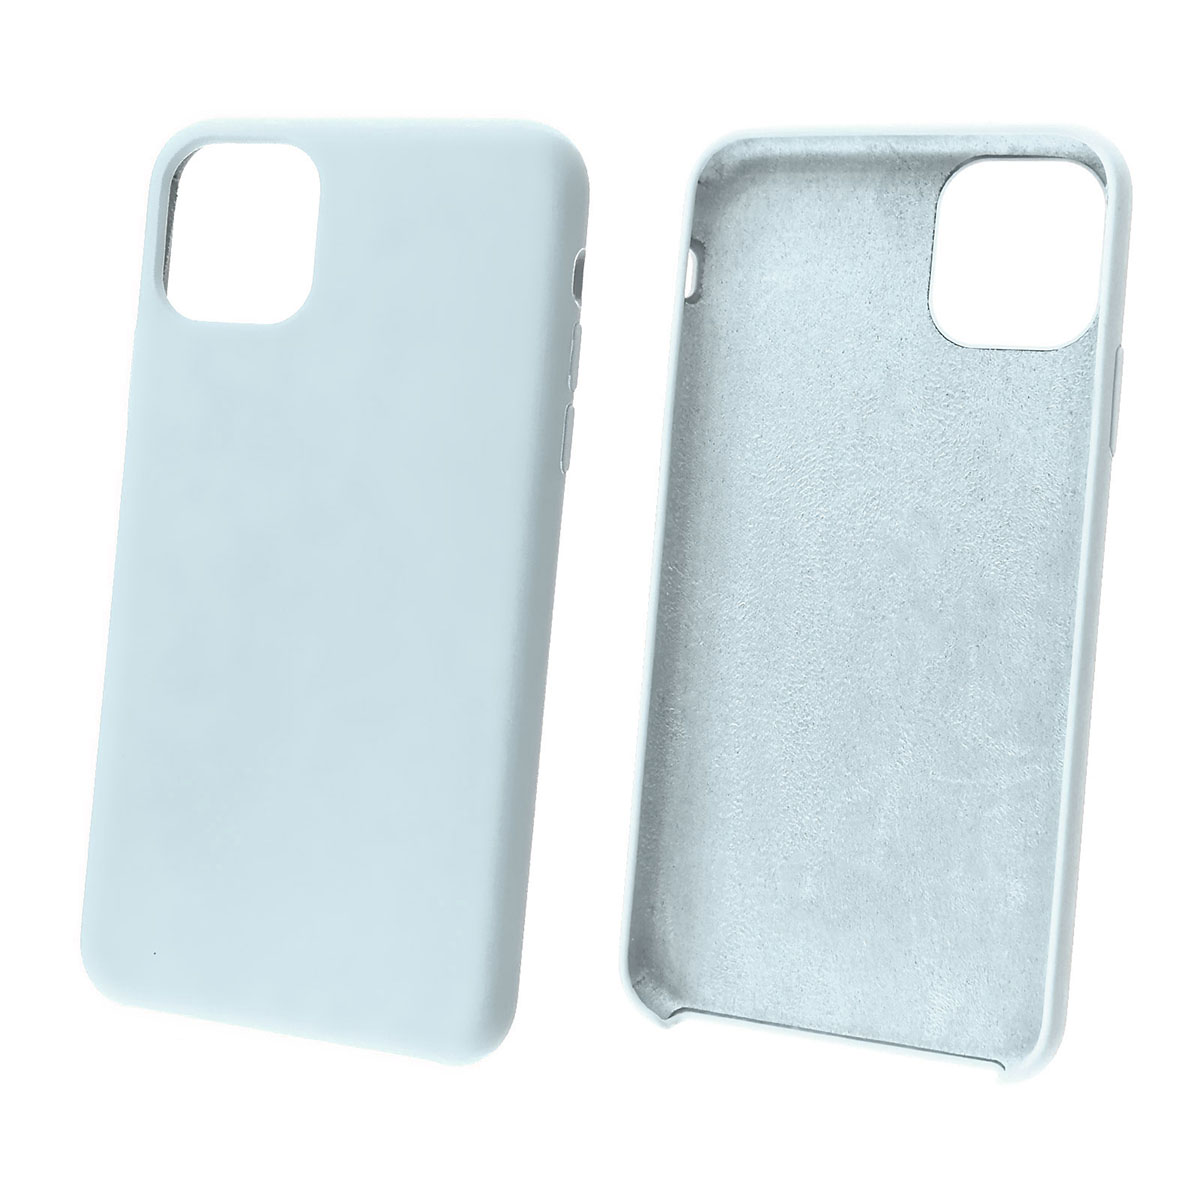 Чехол накладка Silicon Case для APPLE iPhone 11 Pro MAX 2019, силикон, бархат, цвет синий океан (уценка)